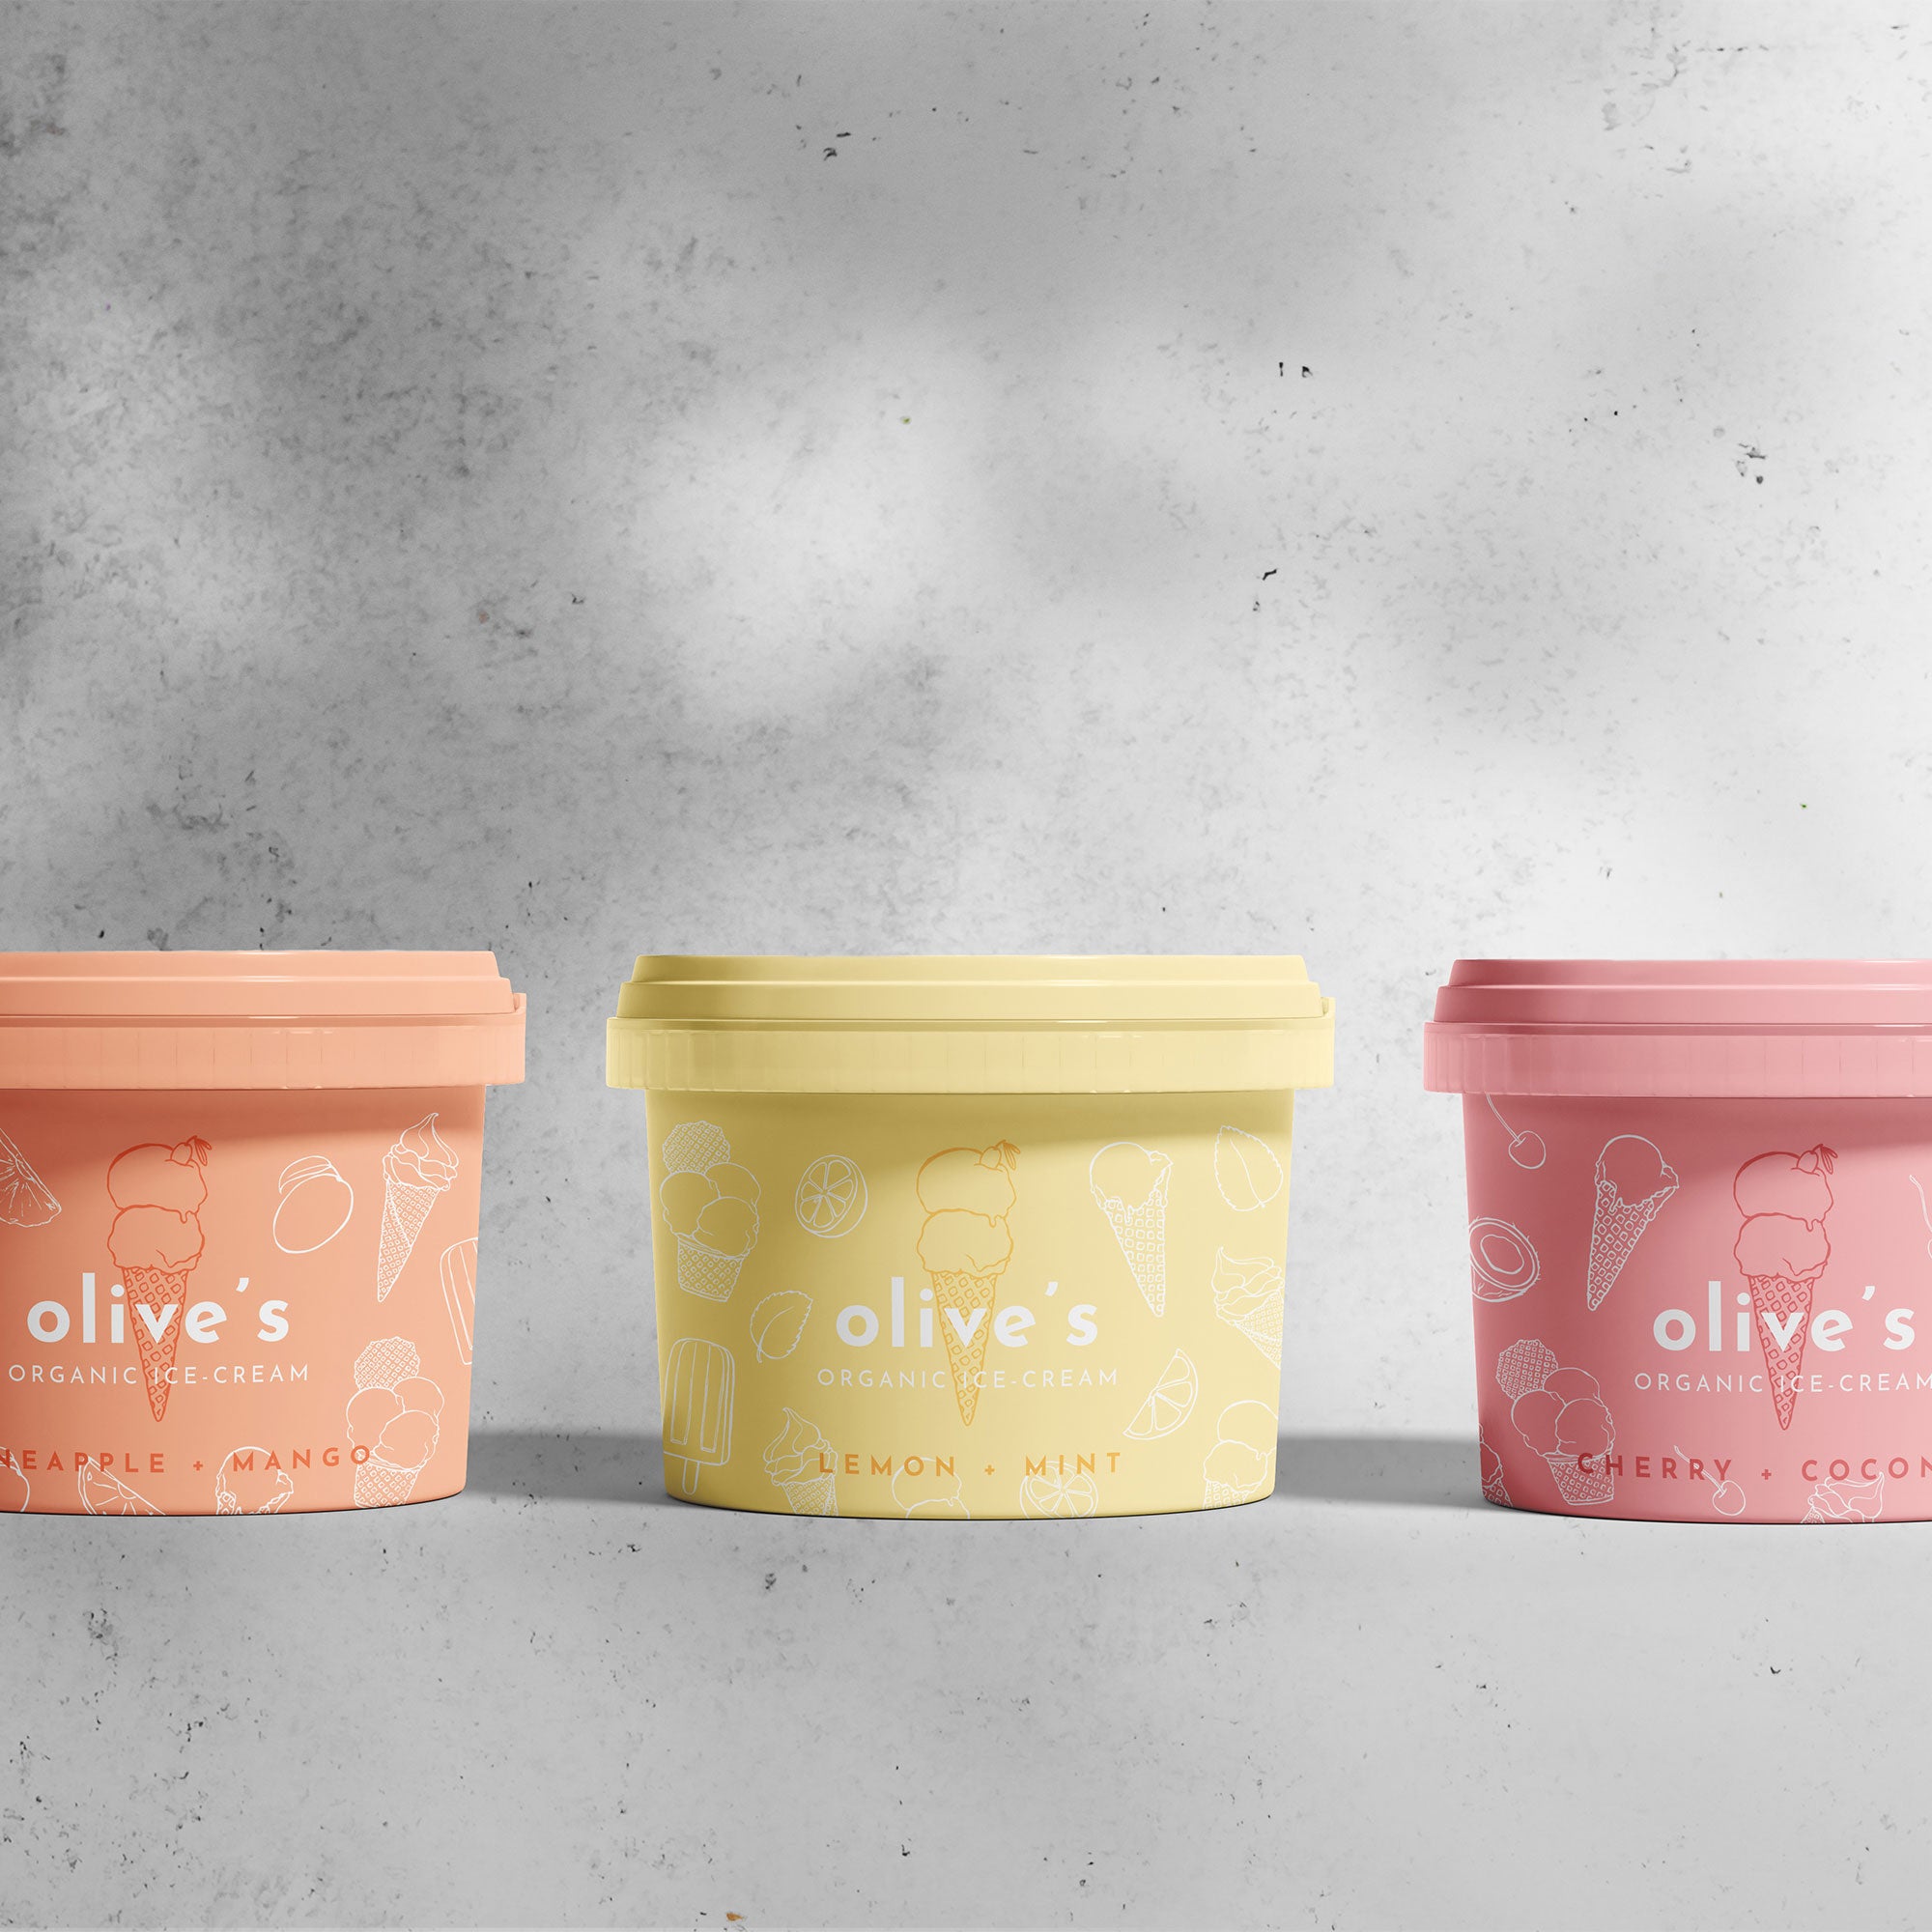 Karolina Król Studio illustrated packaging design minimalist ice cream branding